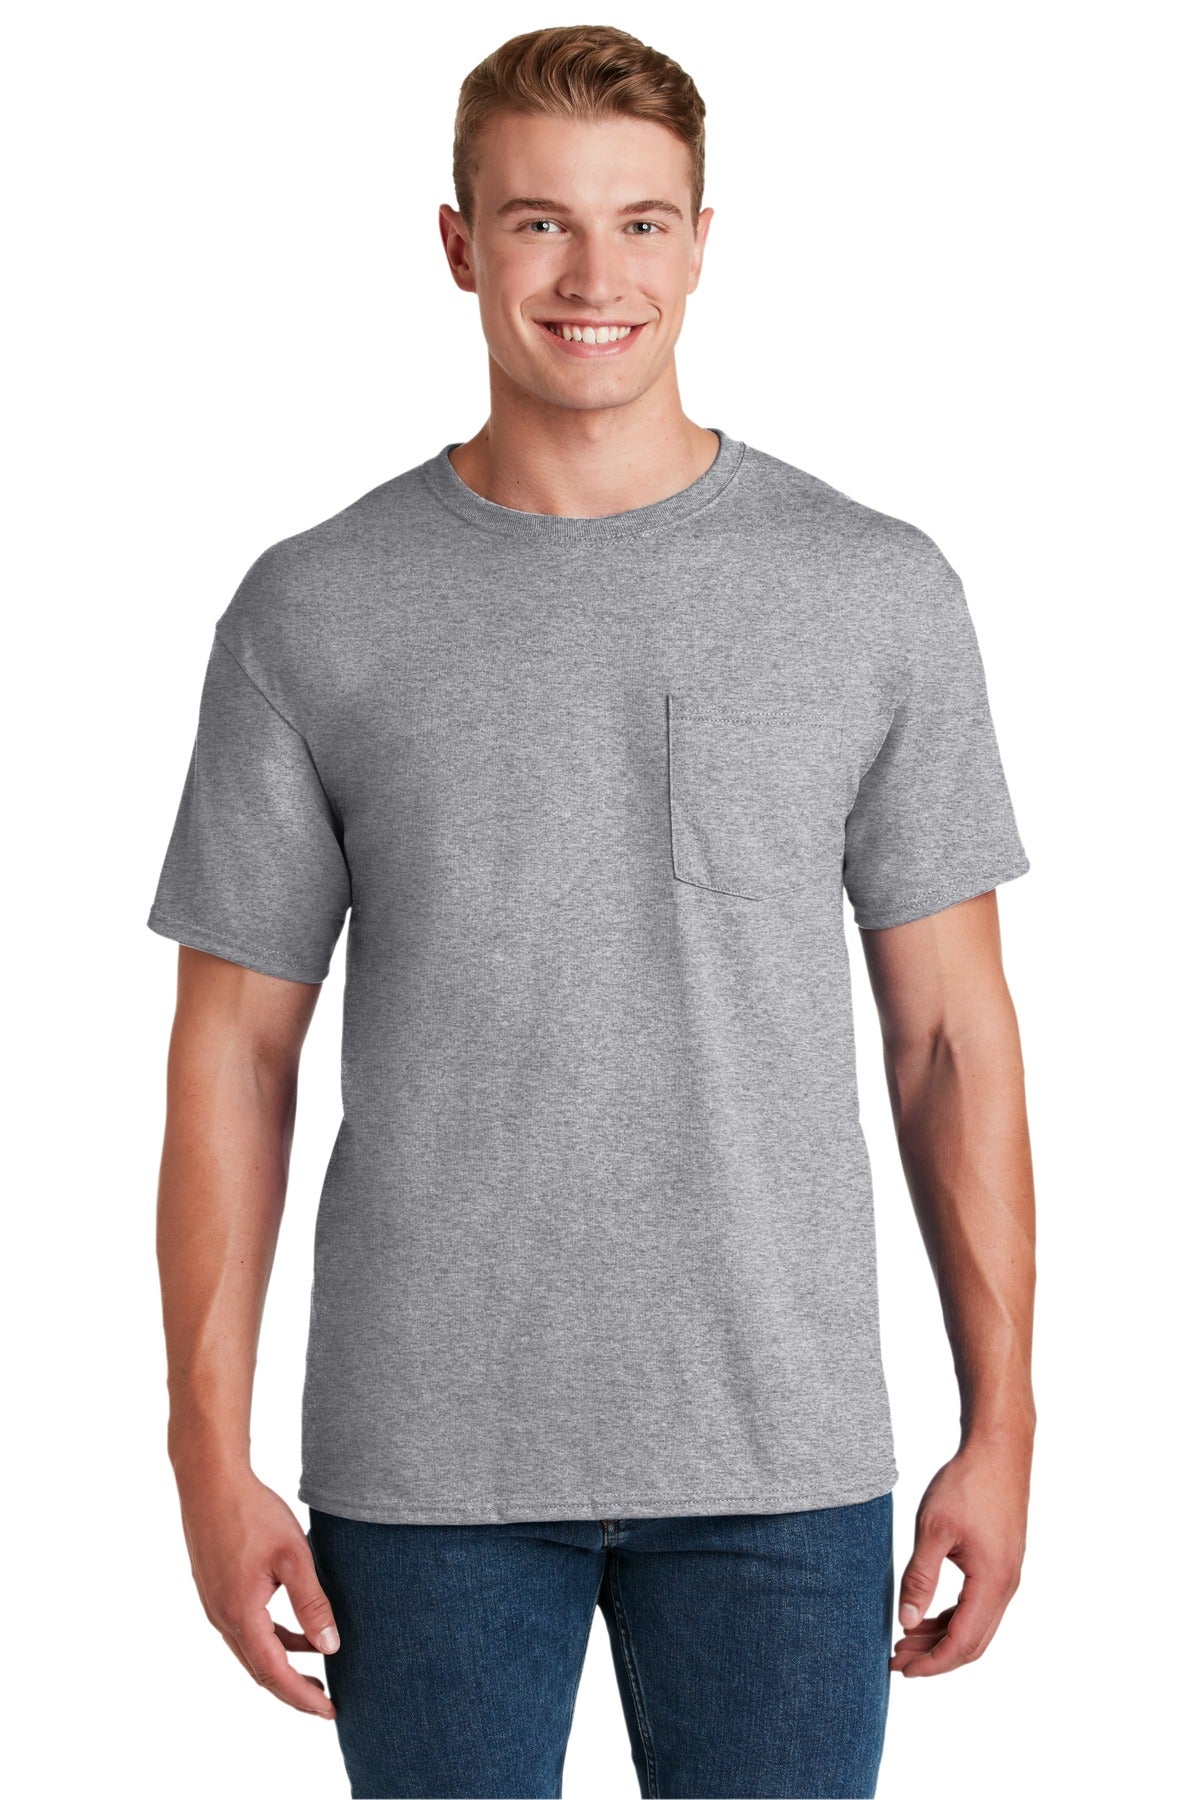 JERZEES® - Dri-Power® 50/50 Cotton/Poly Pocket T-Shirt. 29MP [Athletic Heather] - DFW Impression